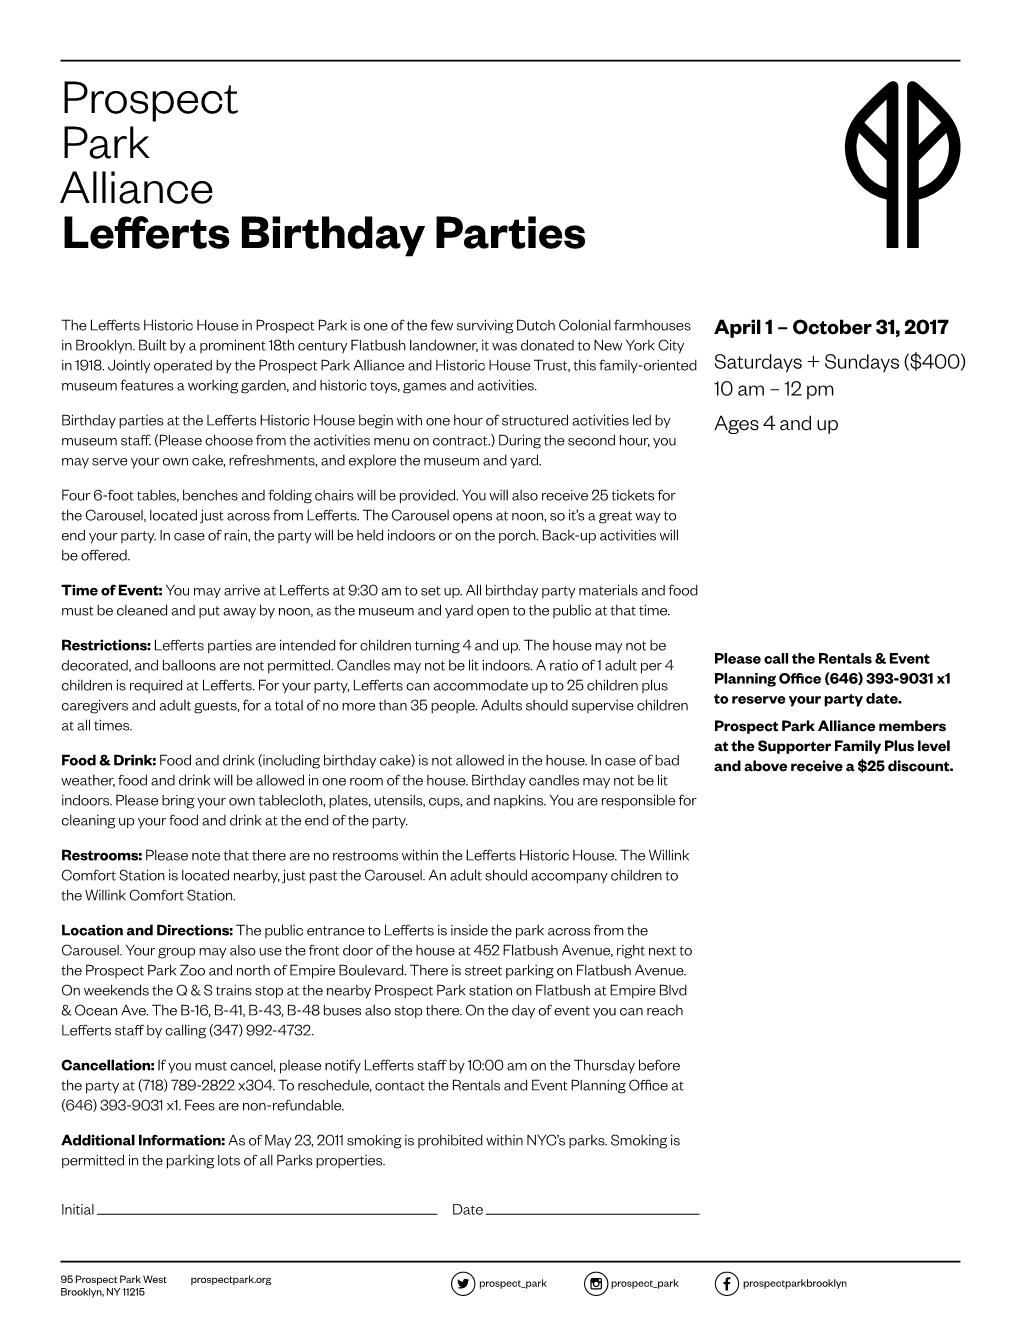 Prospect Park Alliance Lefferts Birthday Parties